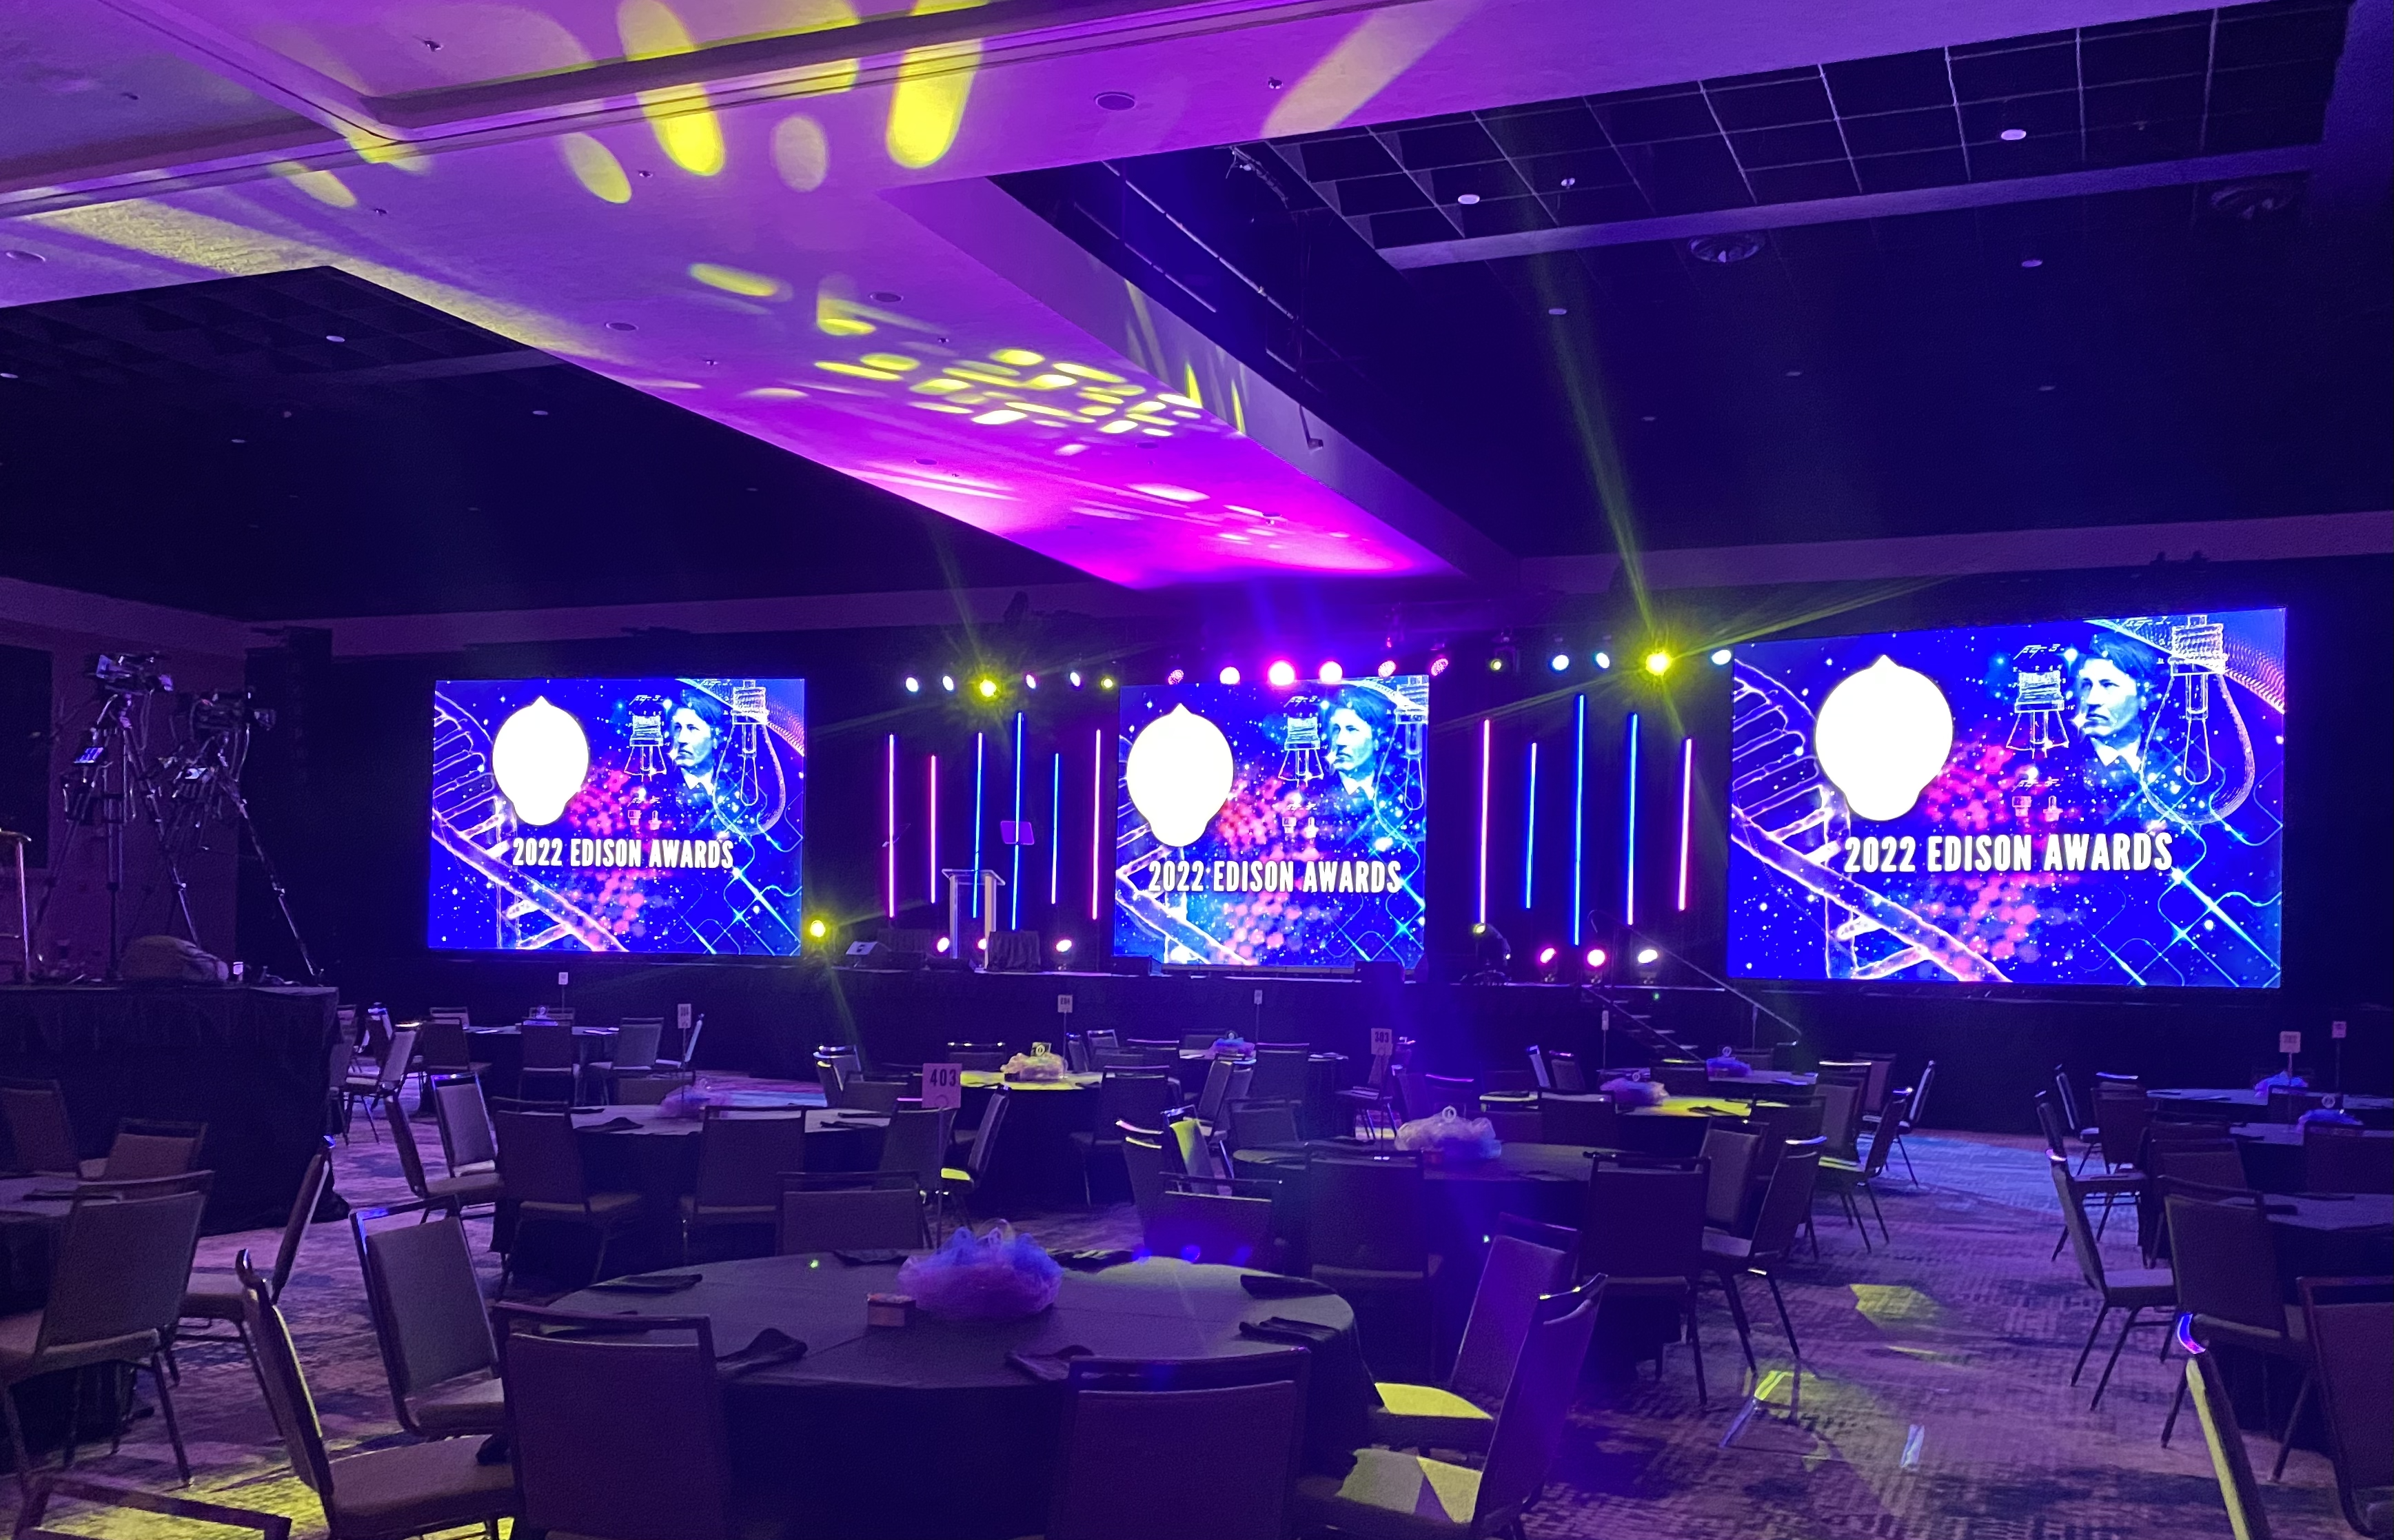 Grand ballroom with three big LED screens